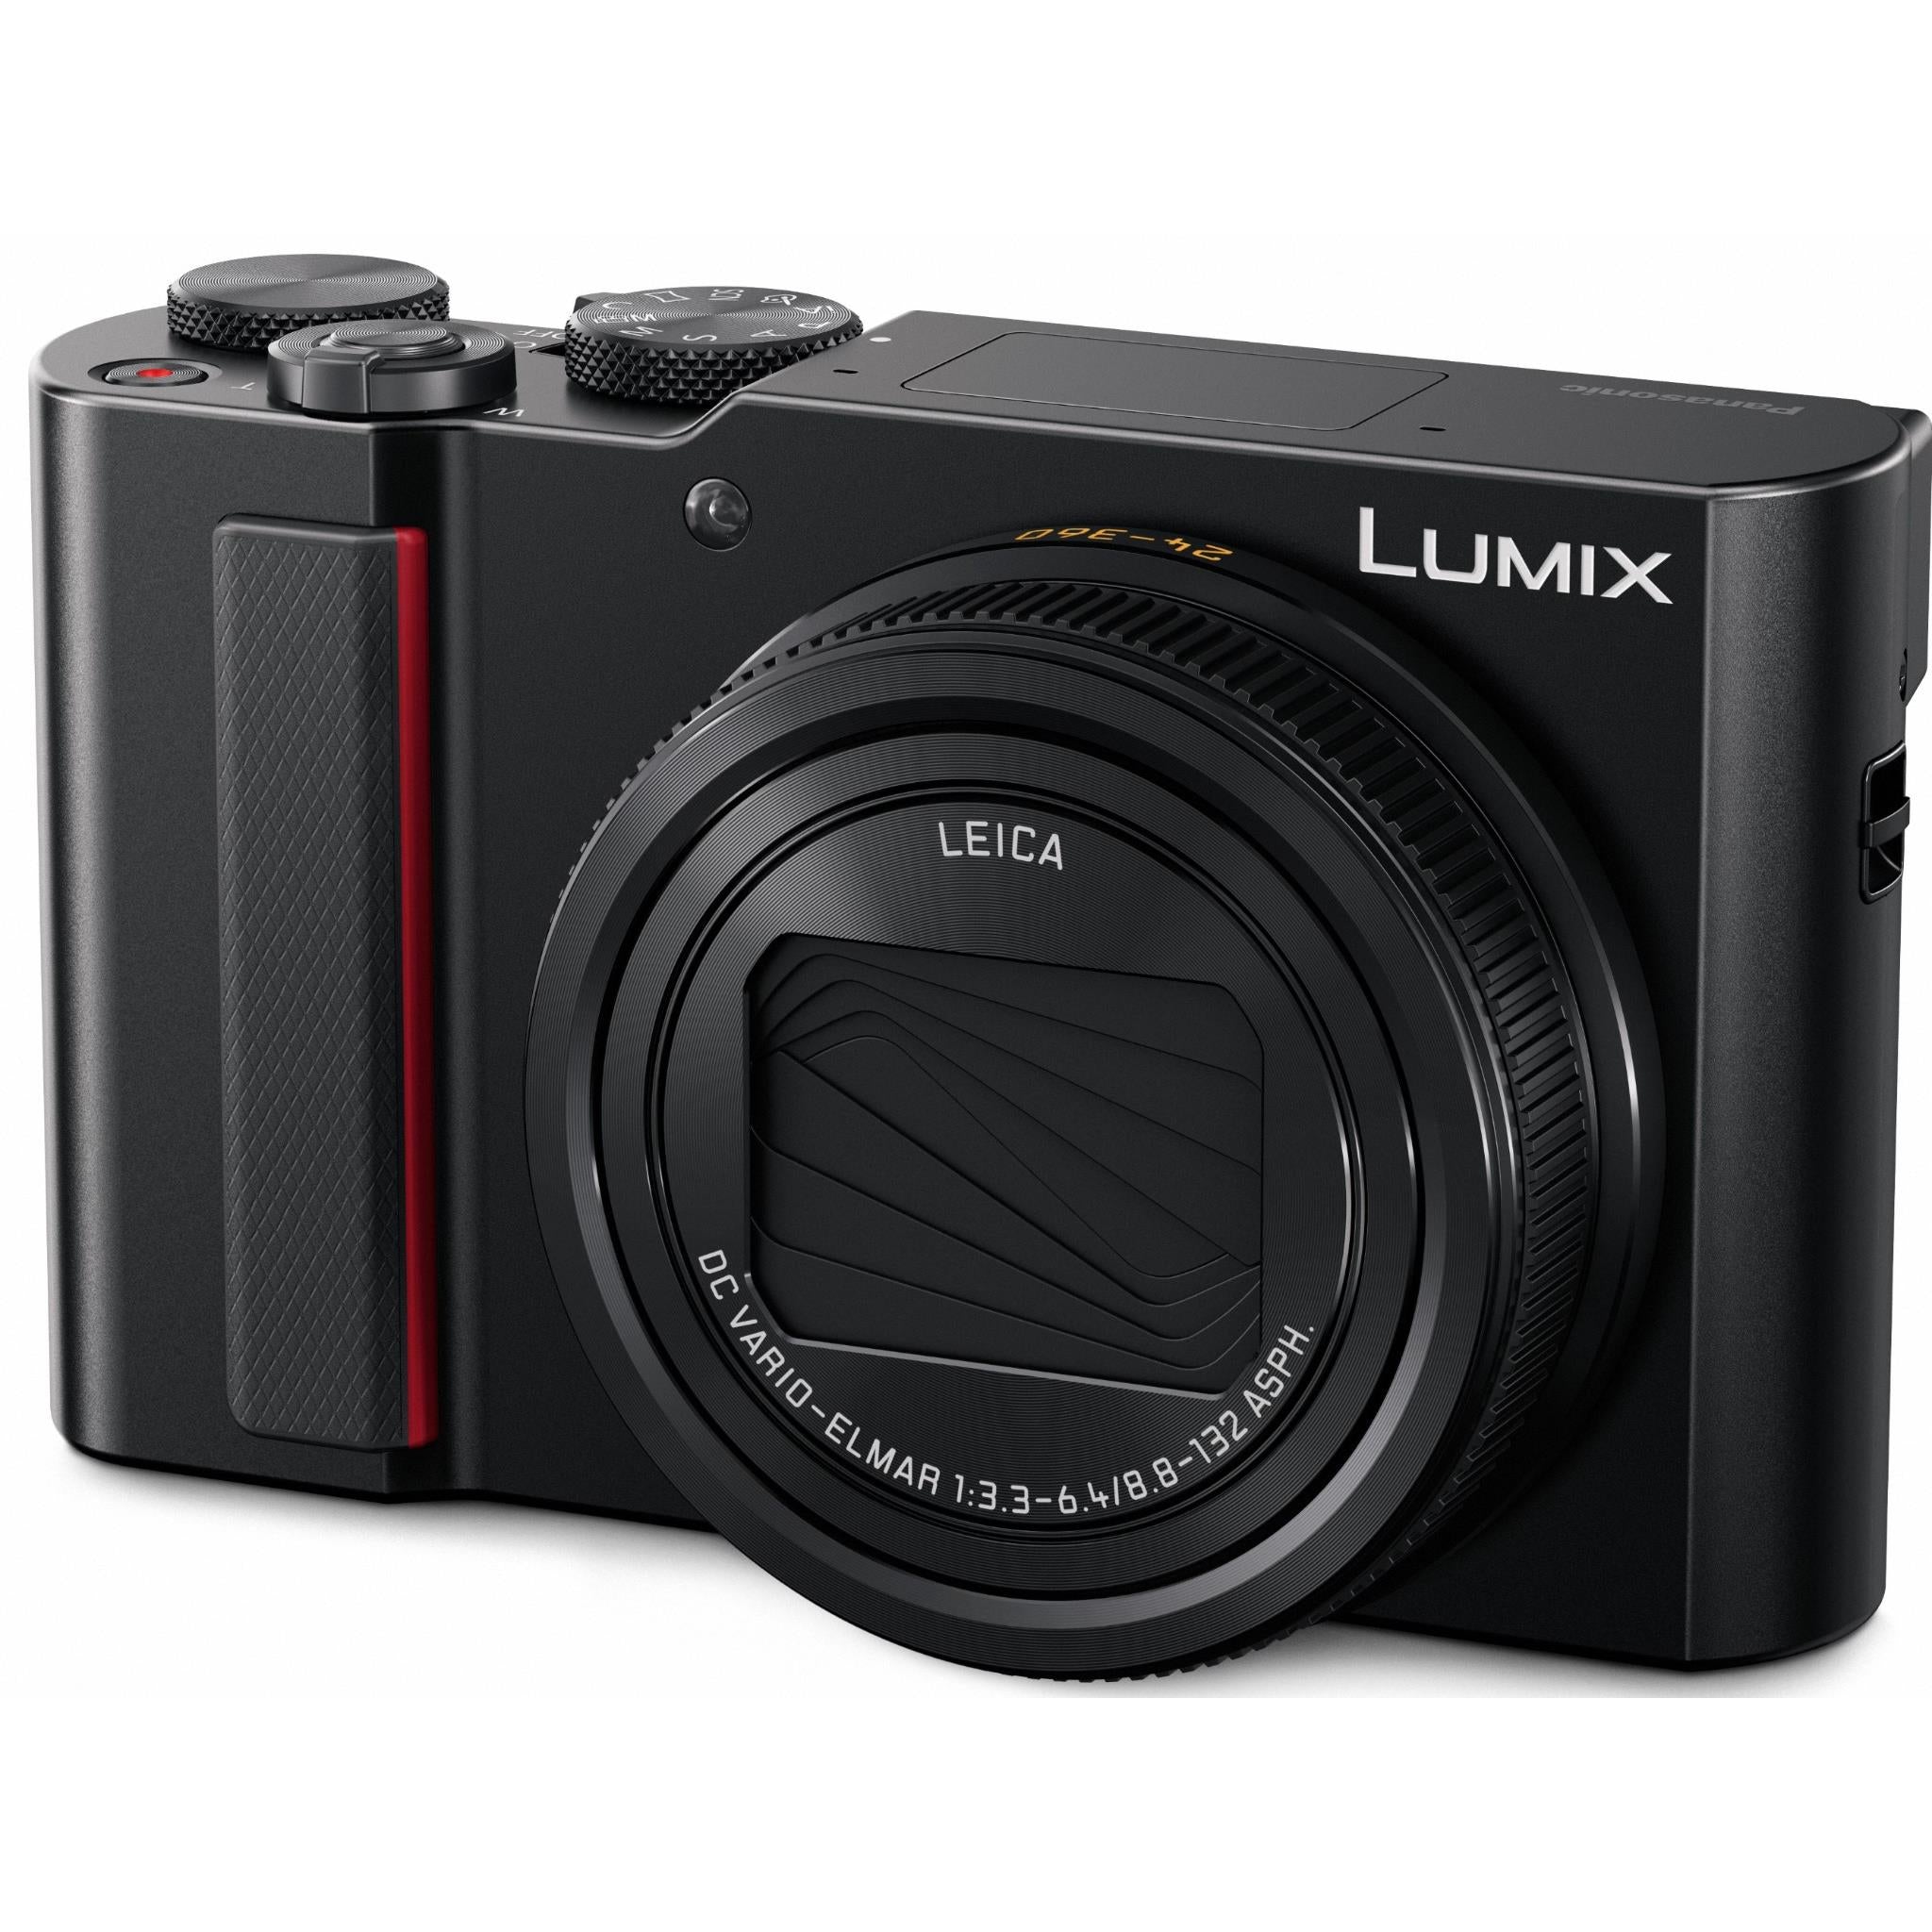 panasonic lumix tz220 digital camera with 1” mos sensor + leica lens [4k video]